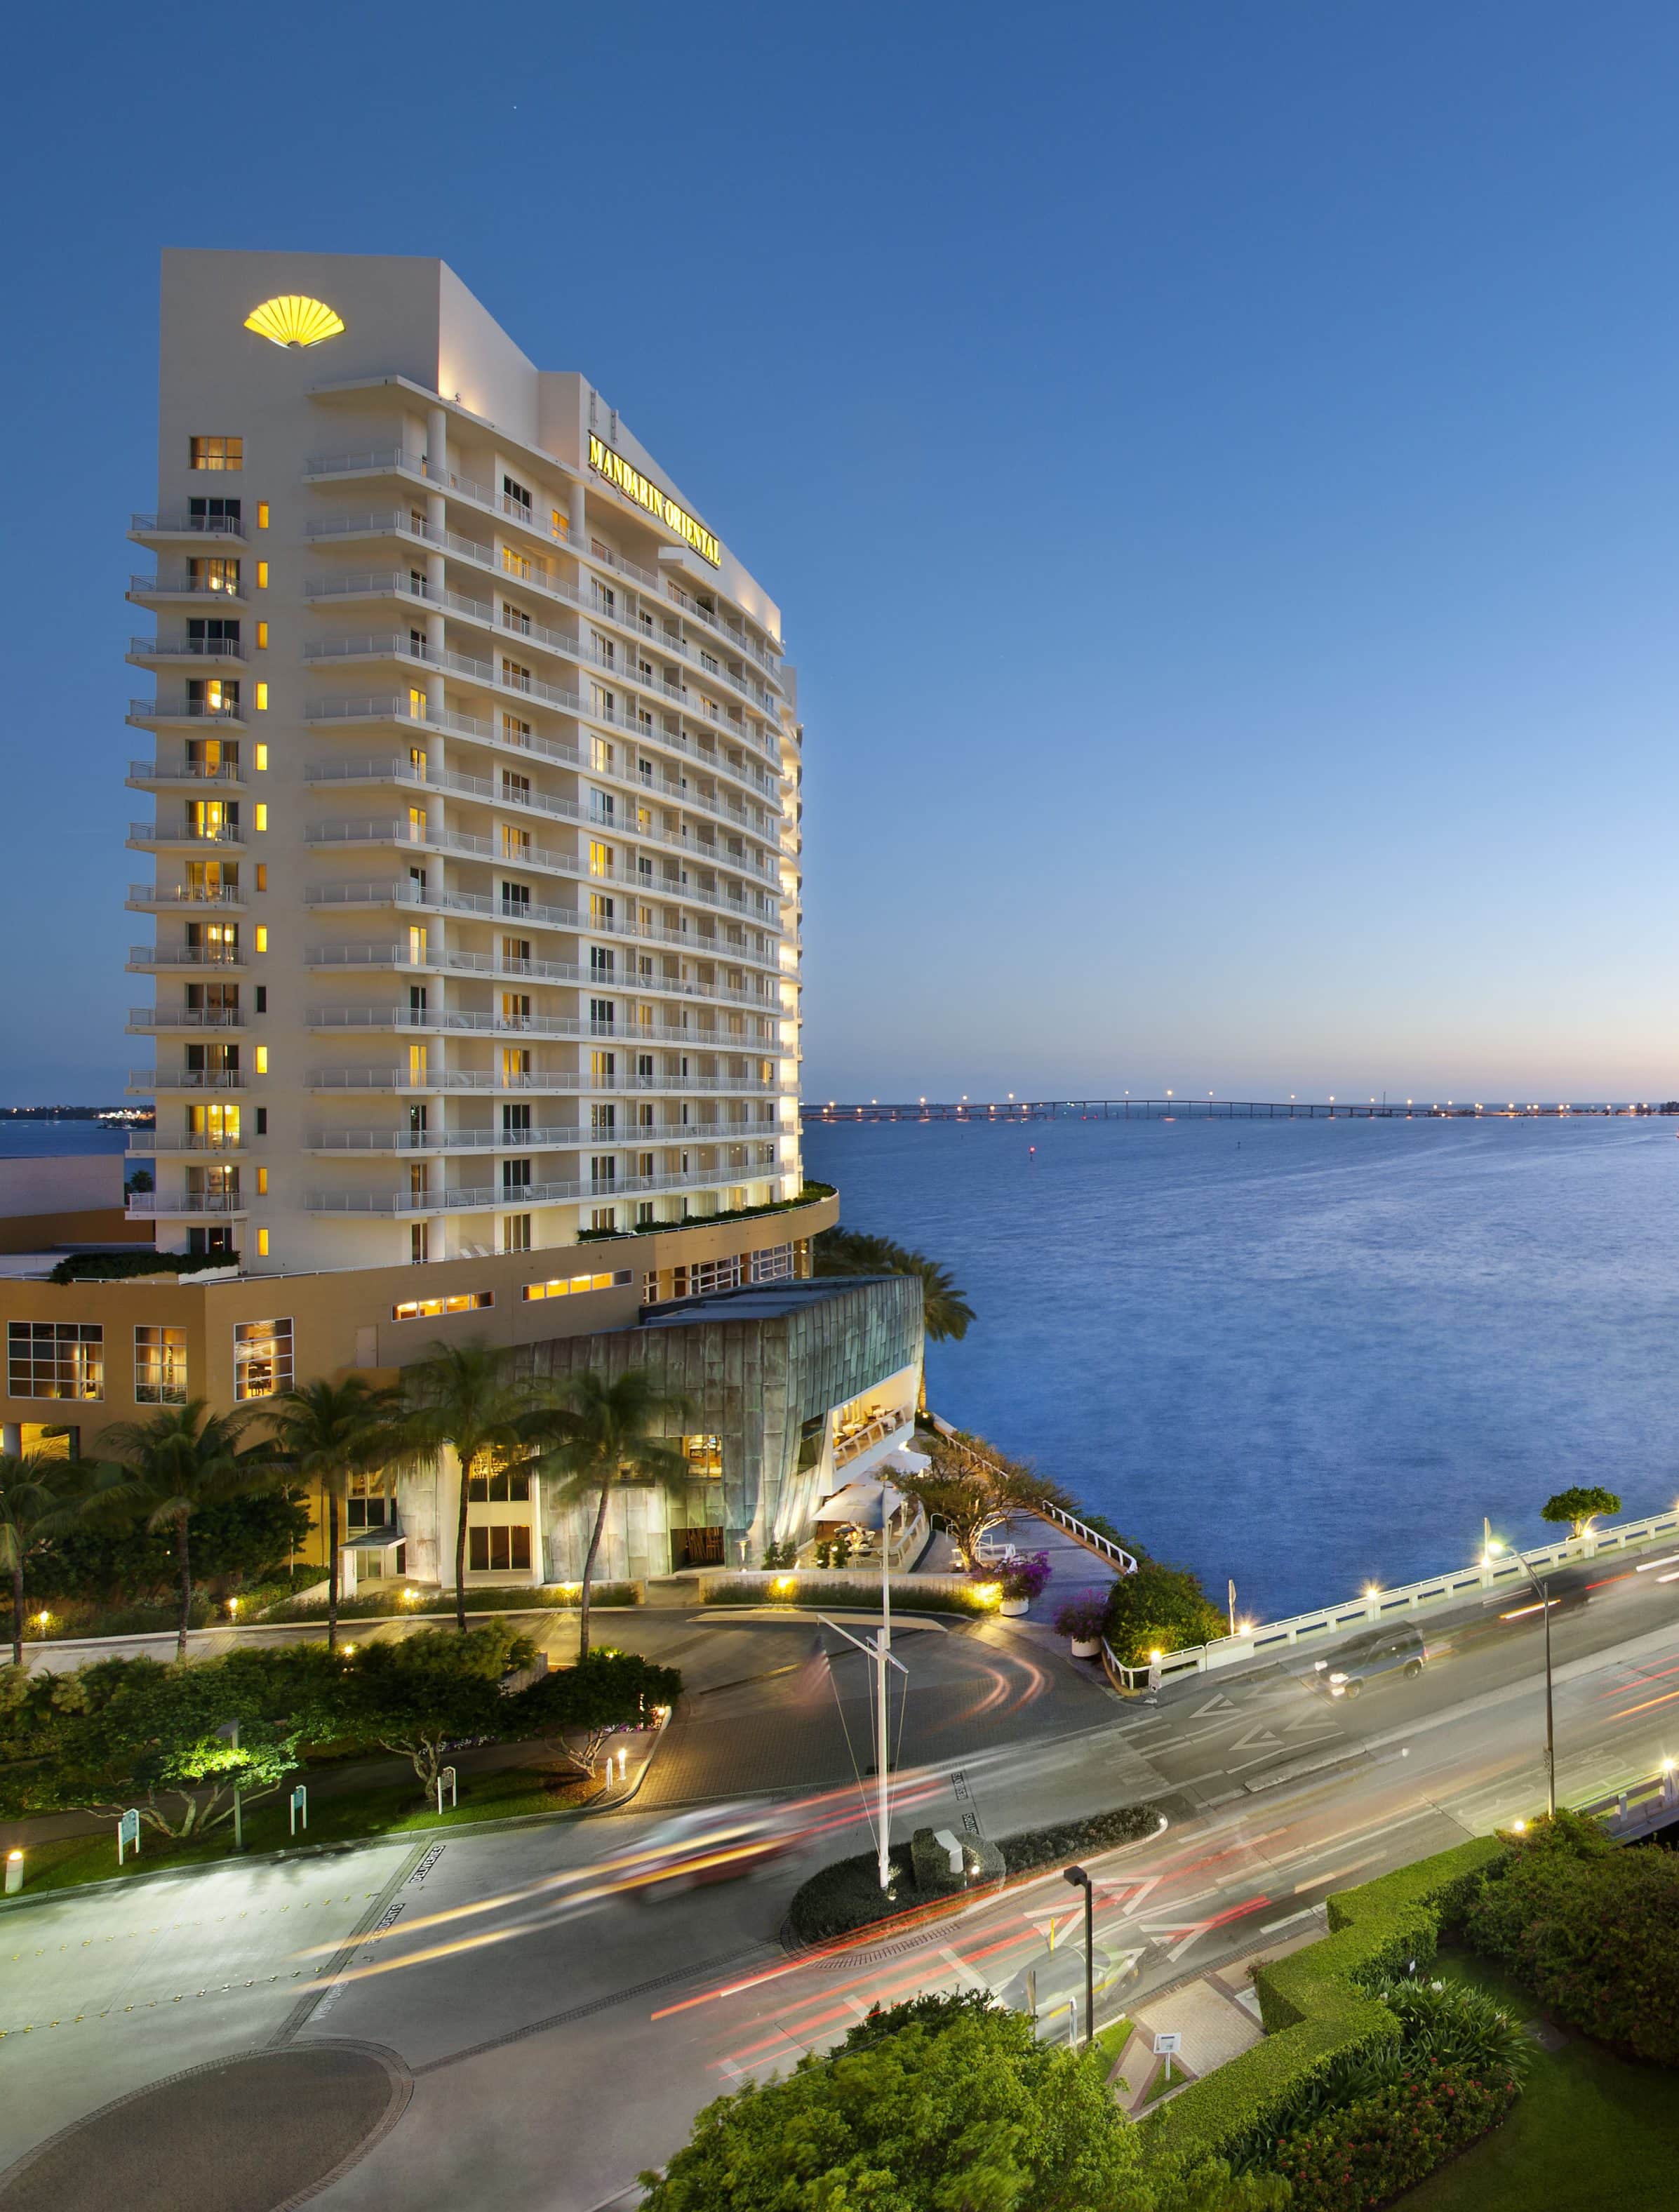 Mandarin Oriental, Miami overlooking Miami's shoreline of high rise buildings.